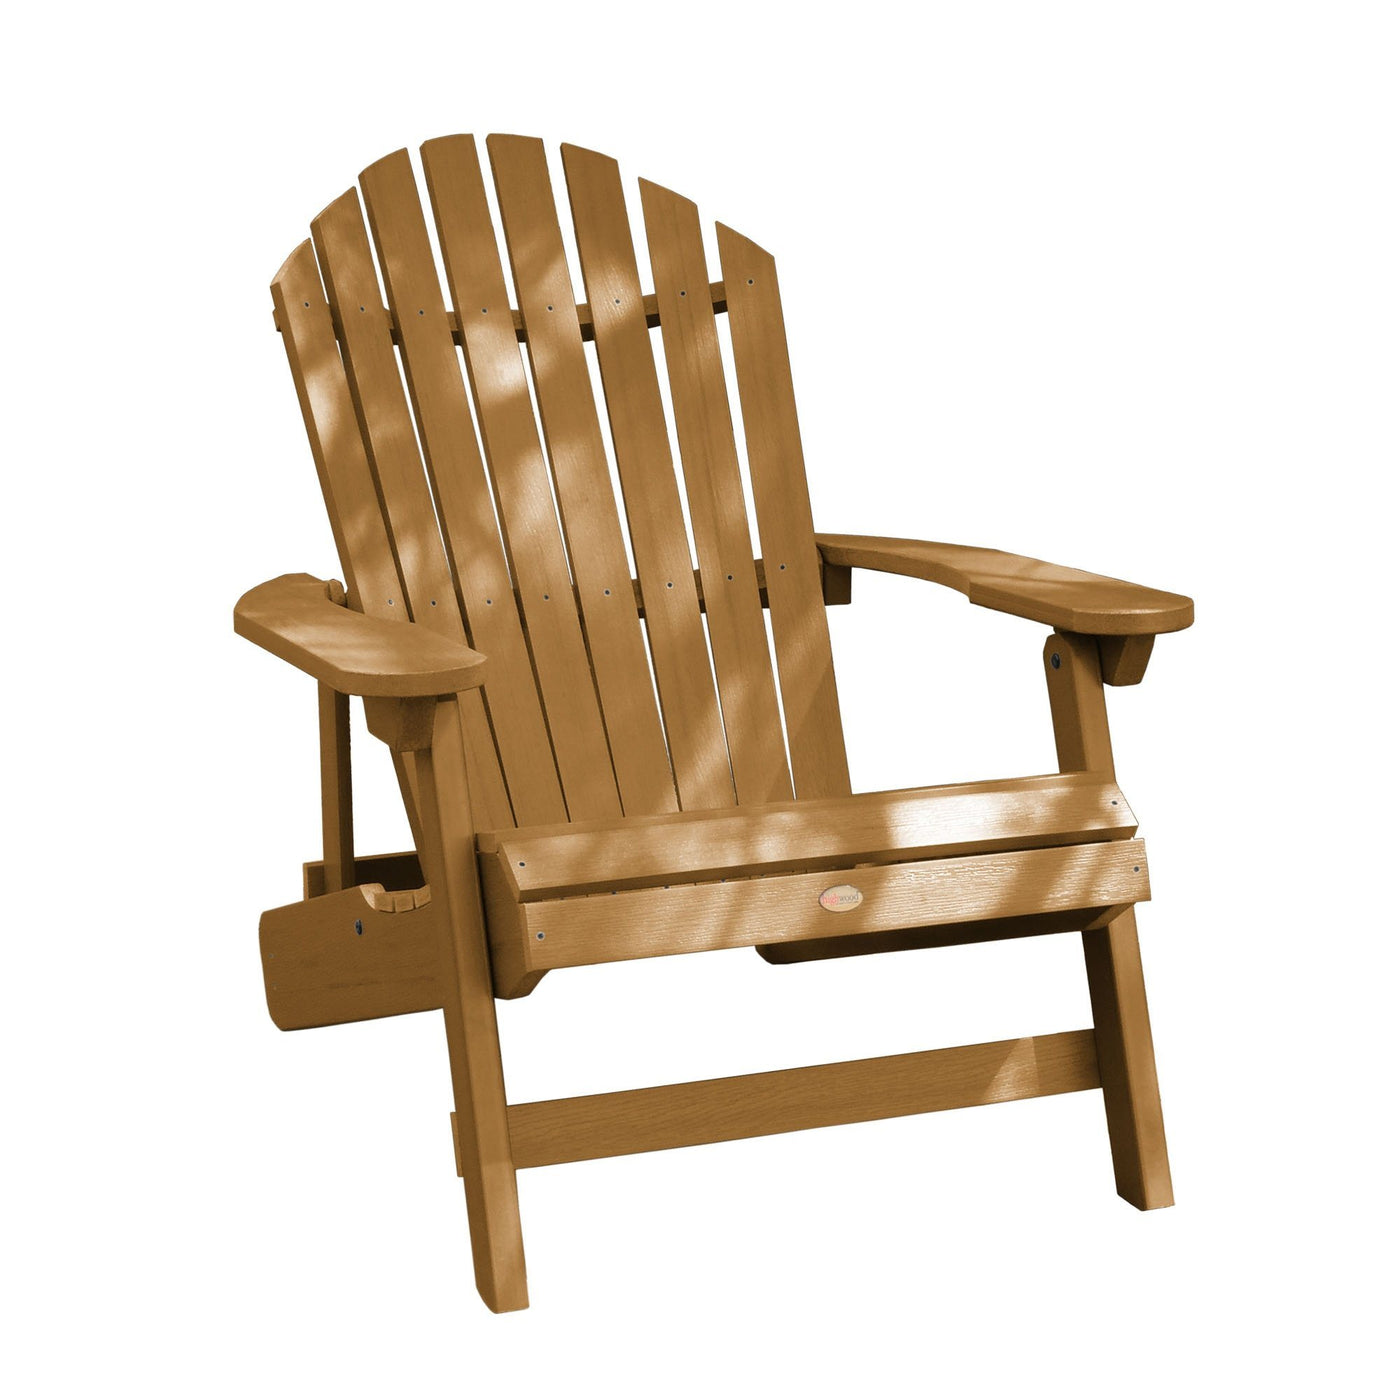 Refurbished King Hamilton Folding & Reclining Adirondack Chair Highwood USA Toffee 